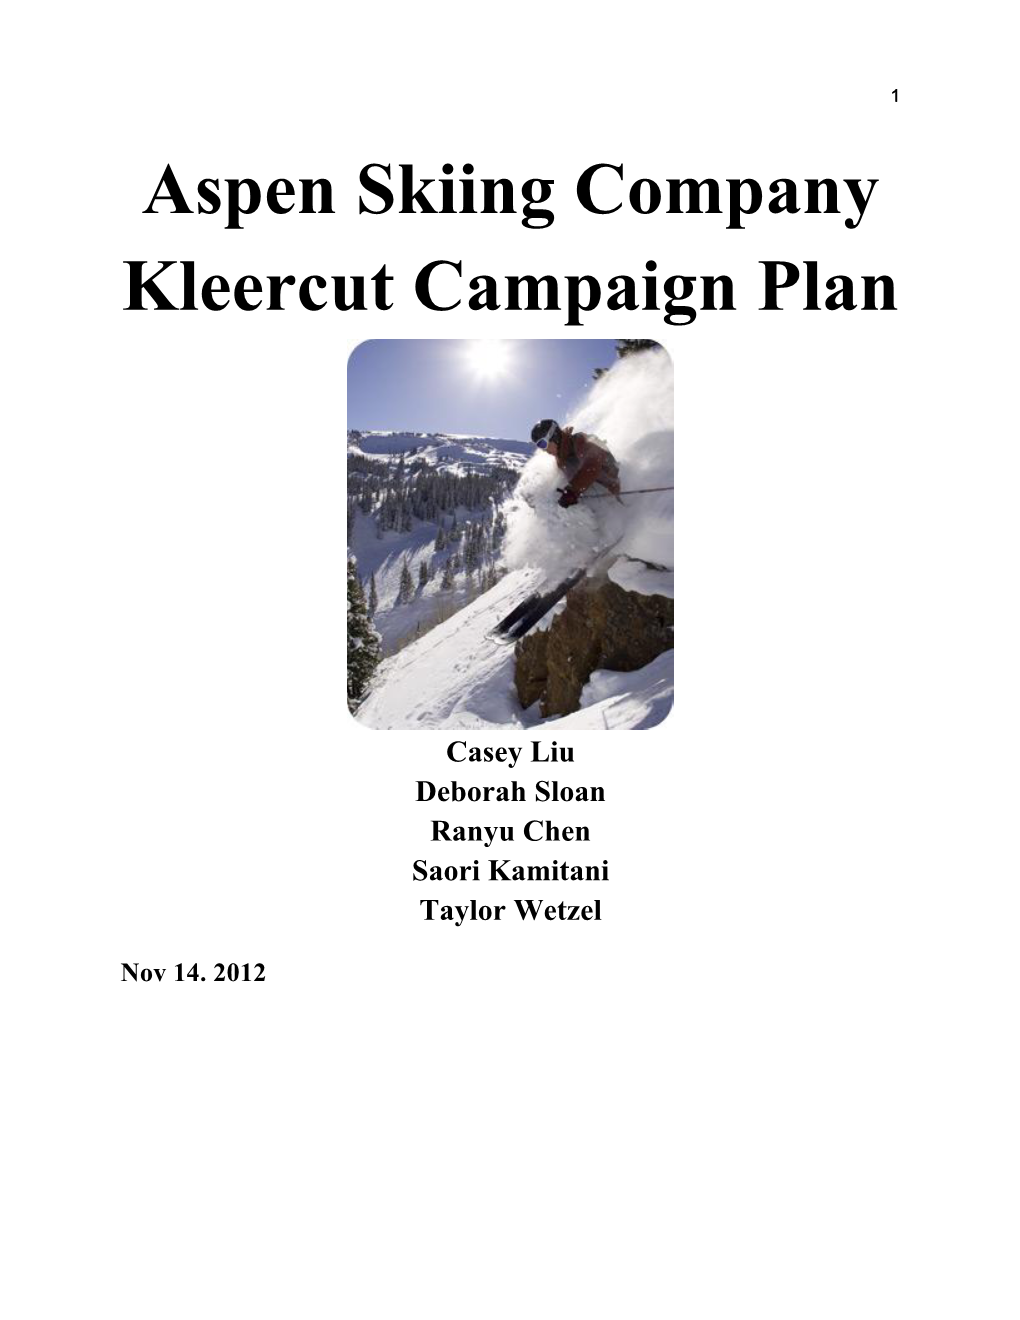 Aspen Skiing Company Kleercut Campaign Plan